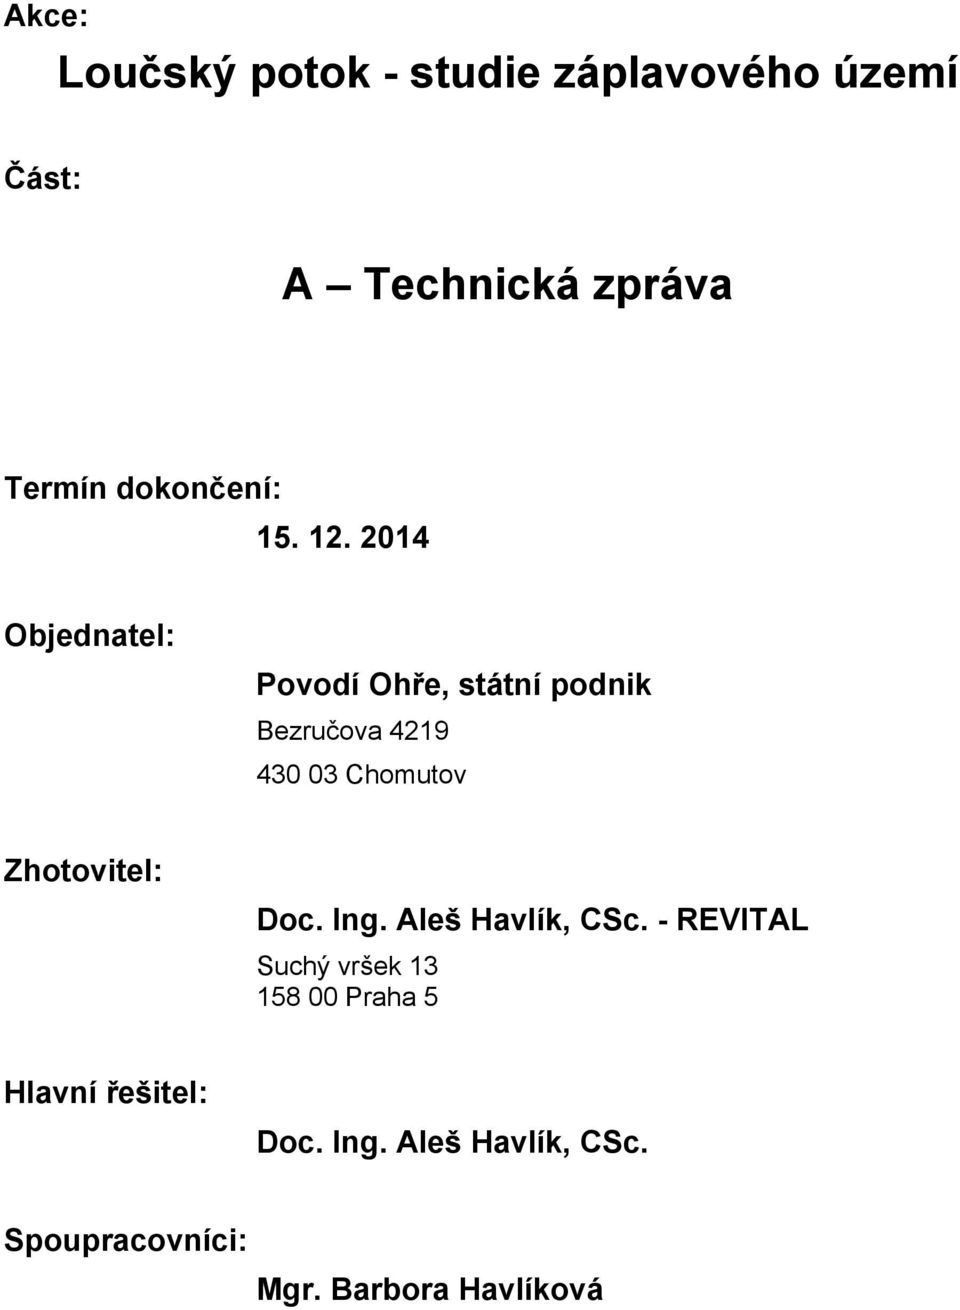 Zhotovitel: Doc. Ing. Aleš Havlík, CSc.